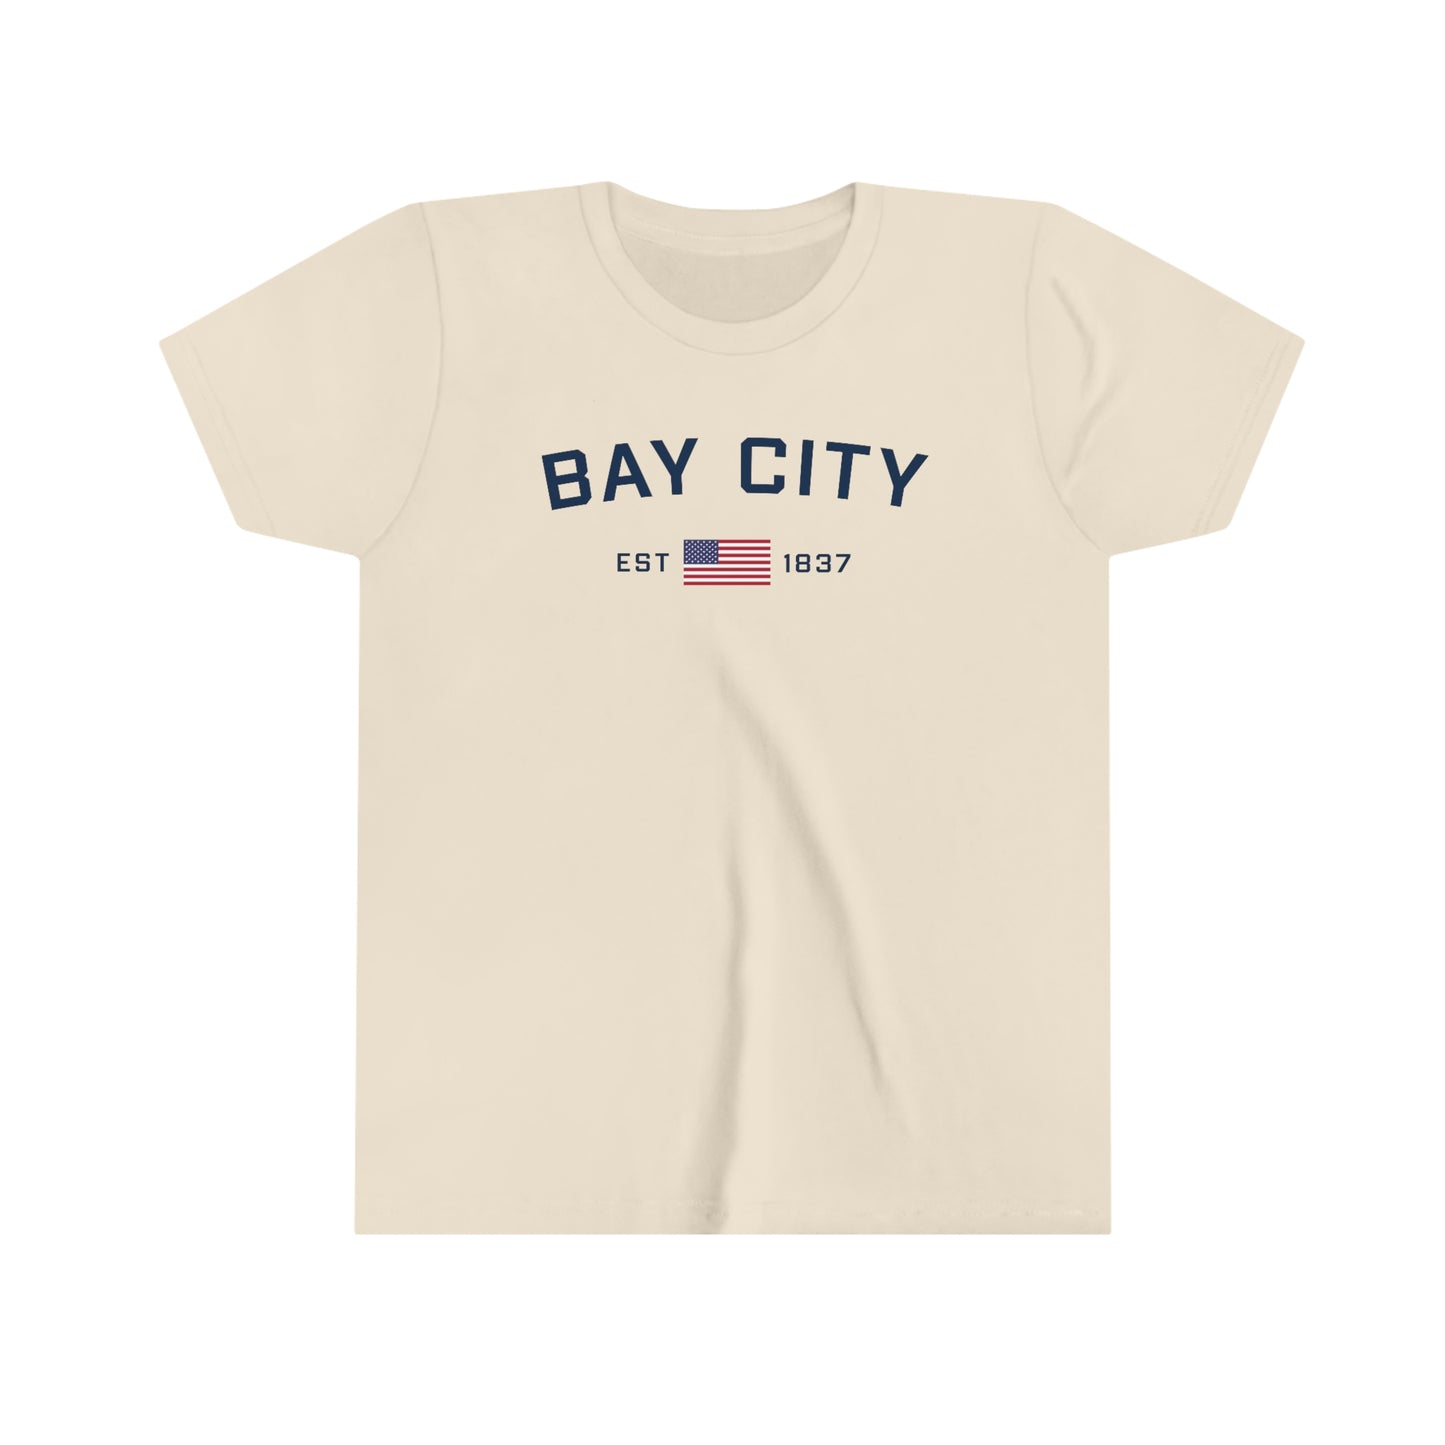 'Bay City EST 1837' T-Shirt | Youth Short Sleeve